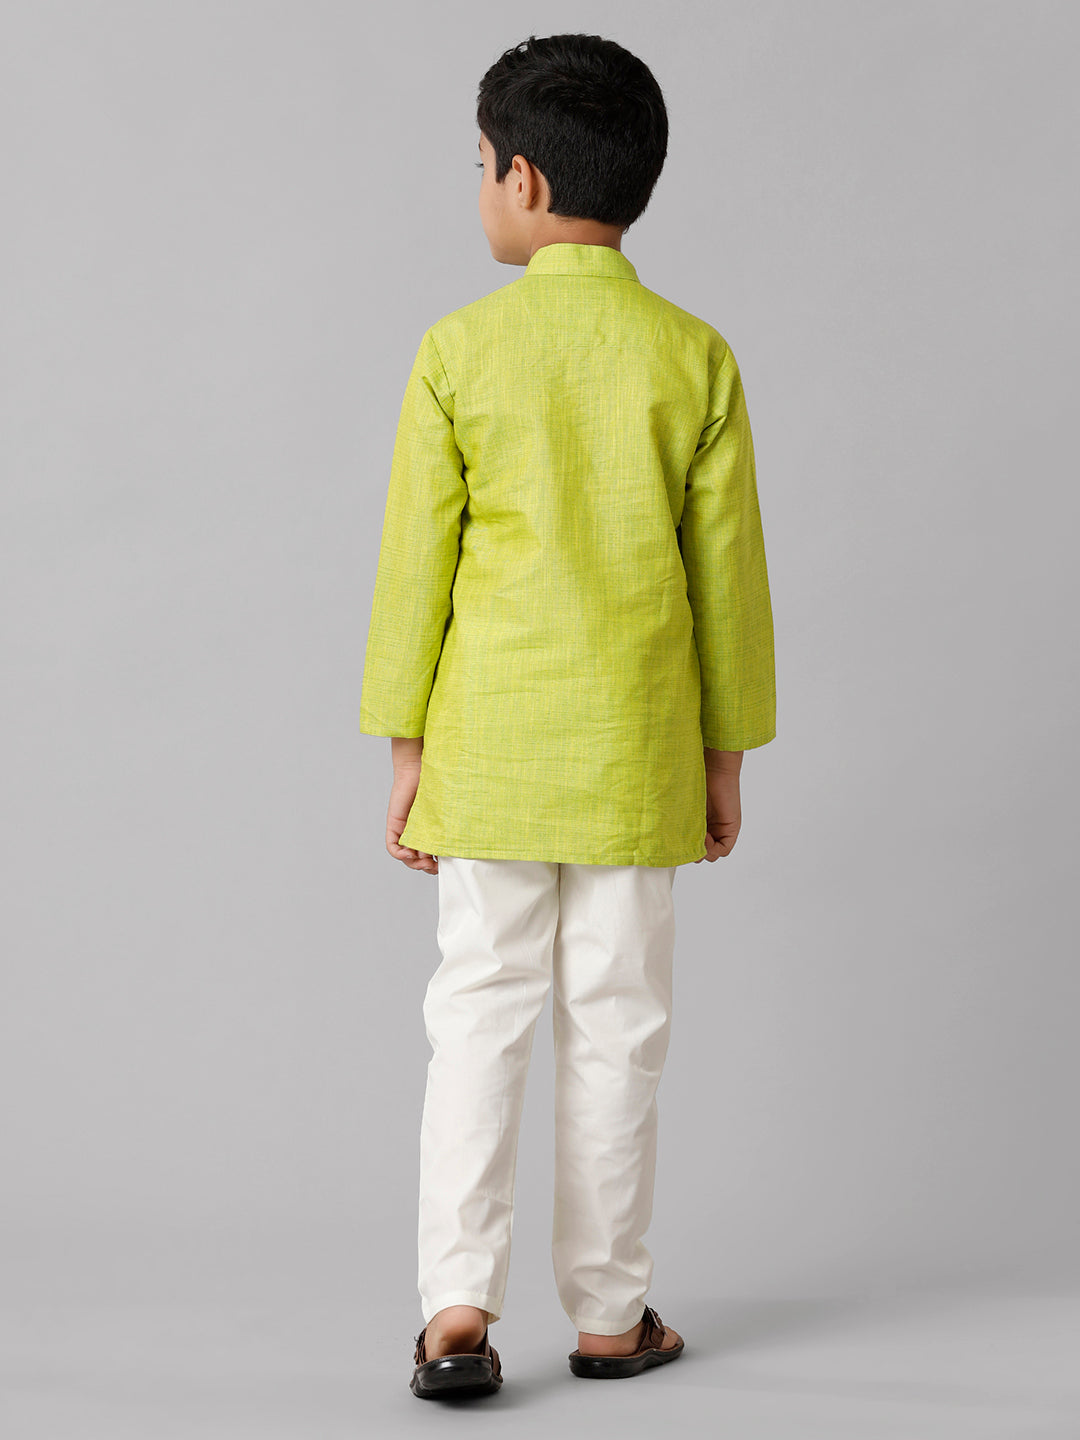 Boys Cotton Full Sleeves Parrot Green Kurta with Cream Pyjama Pant Combo FS2-Back view